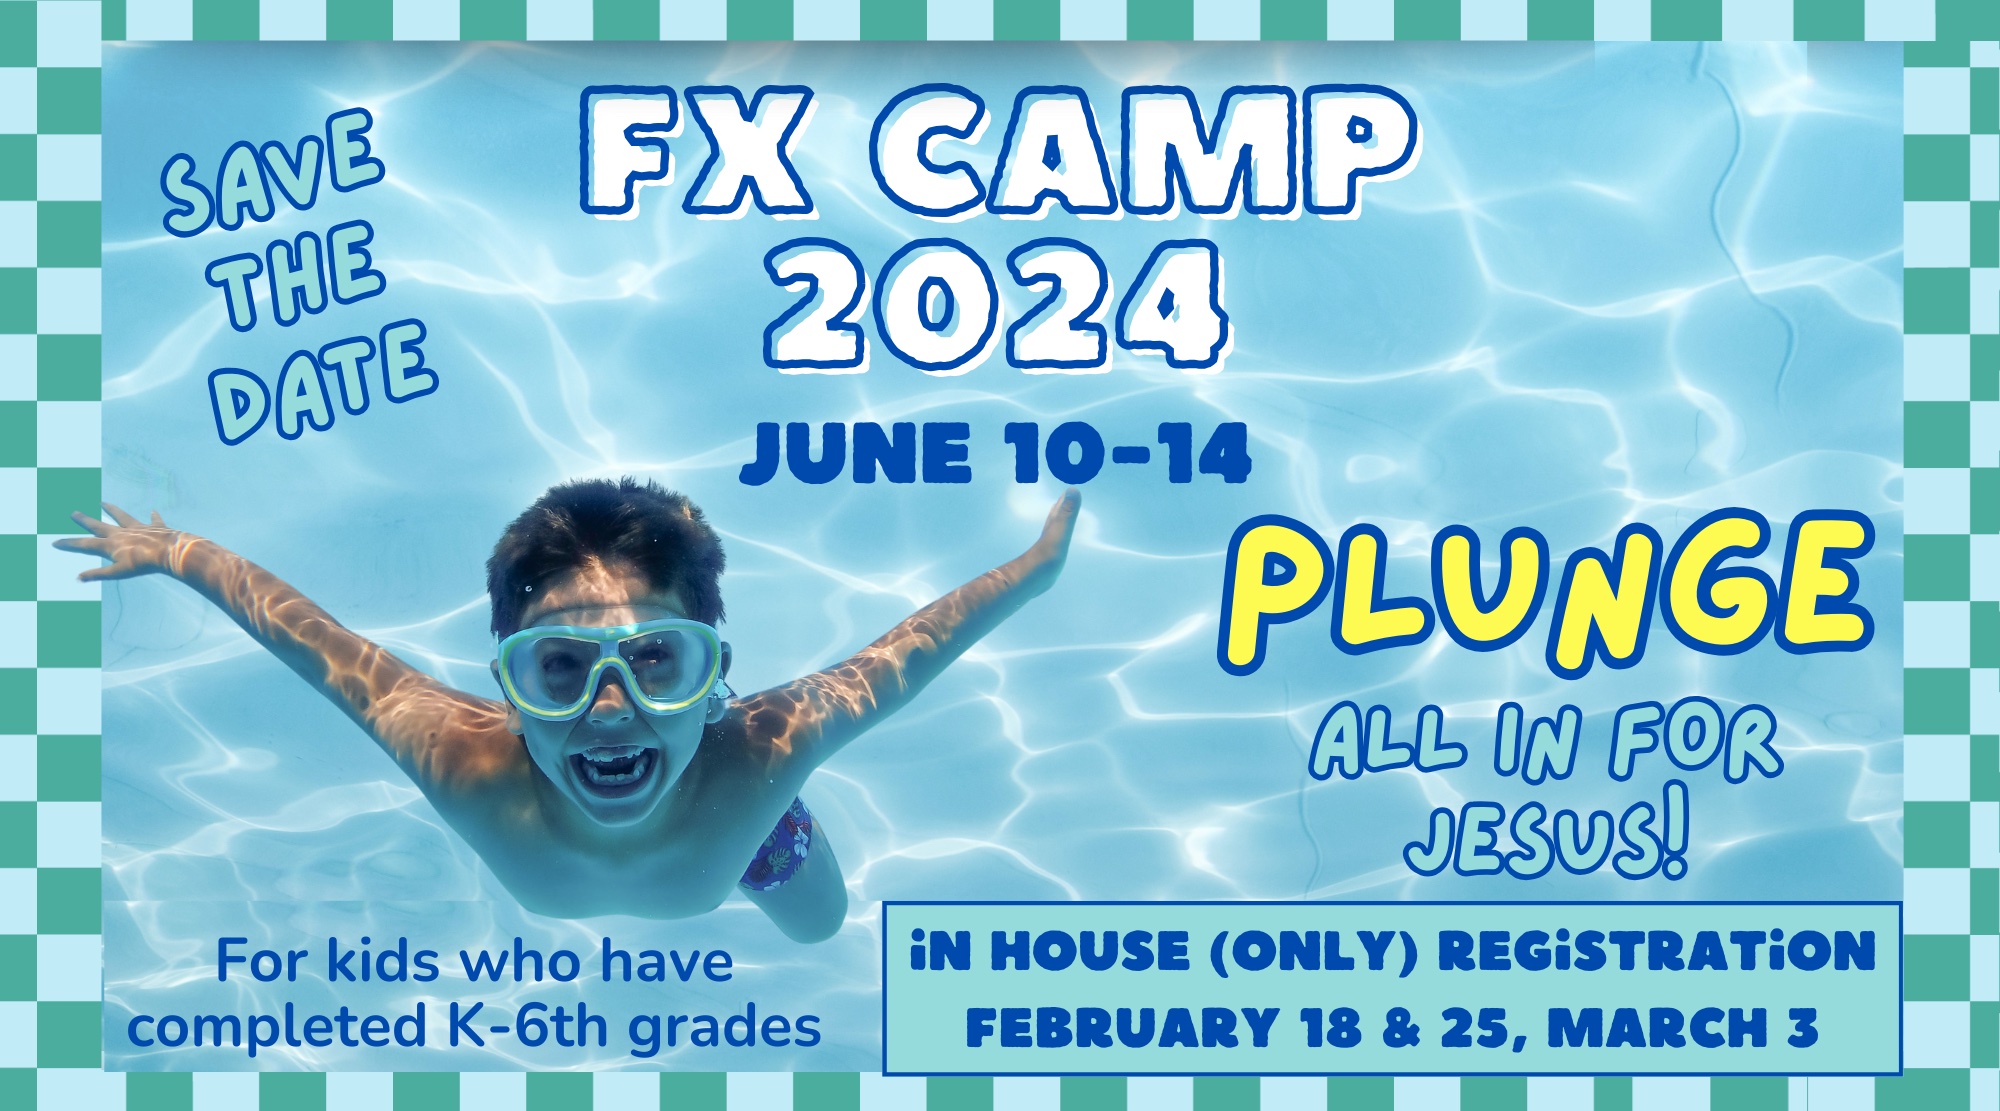 FX Camp 2024 Save the Date (9 x 5 in) - final